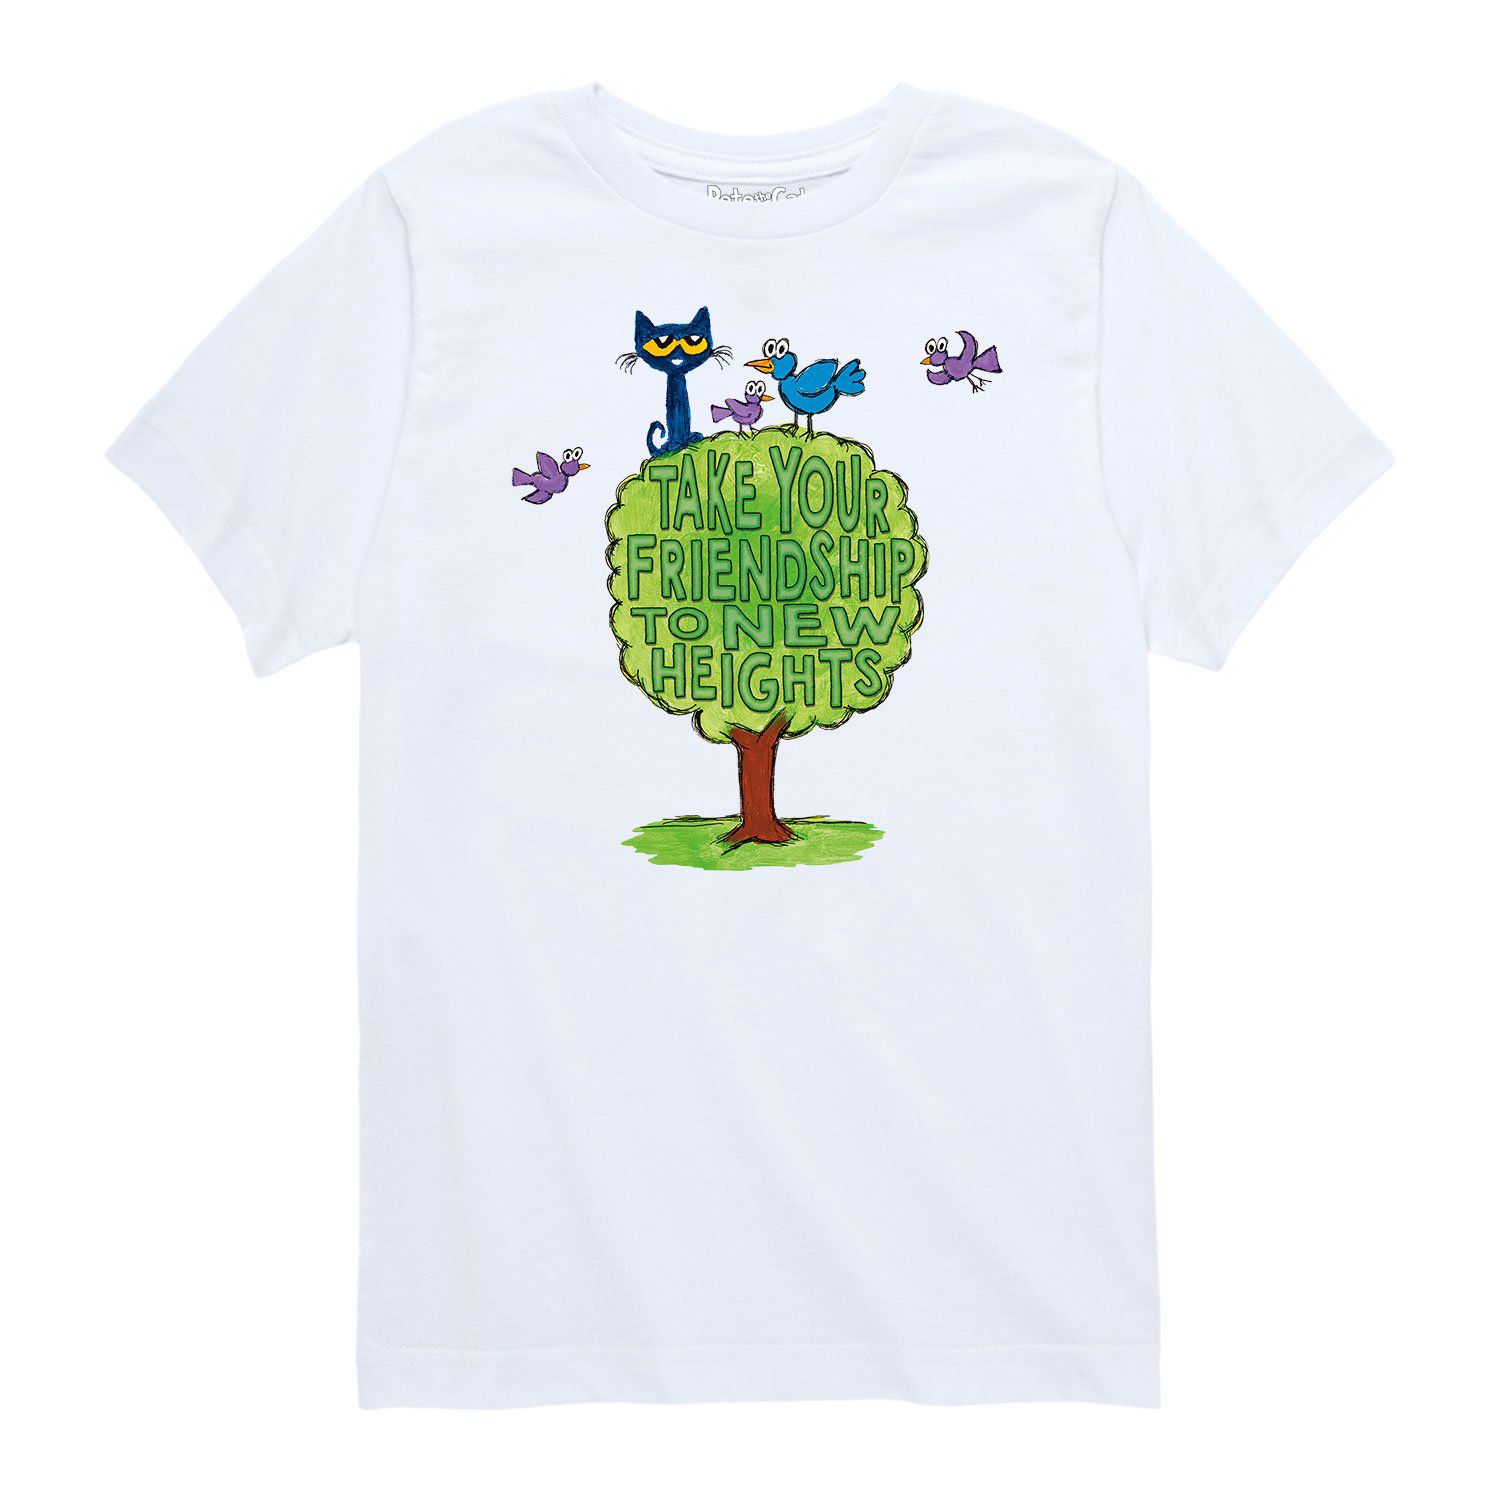 Футболка с рисунком Pete The Cat Tree для мальчиков 8–20 лет Licensed Character футболка groovy с рисунком pete the cat для мальчиков 8–20 лет licensed character